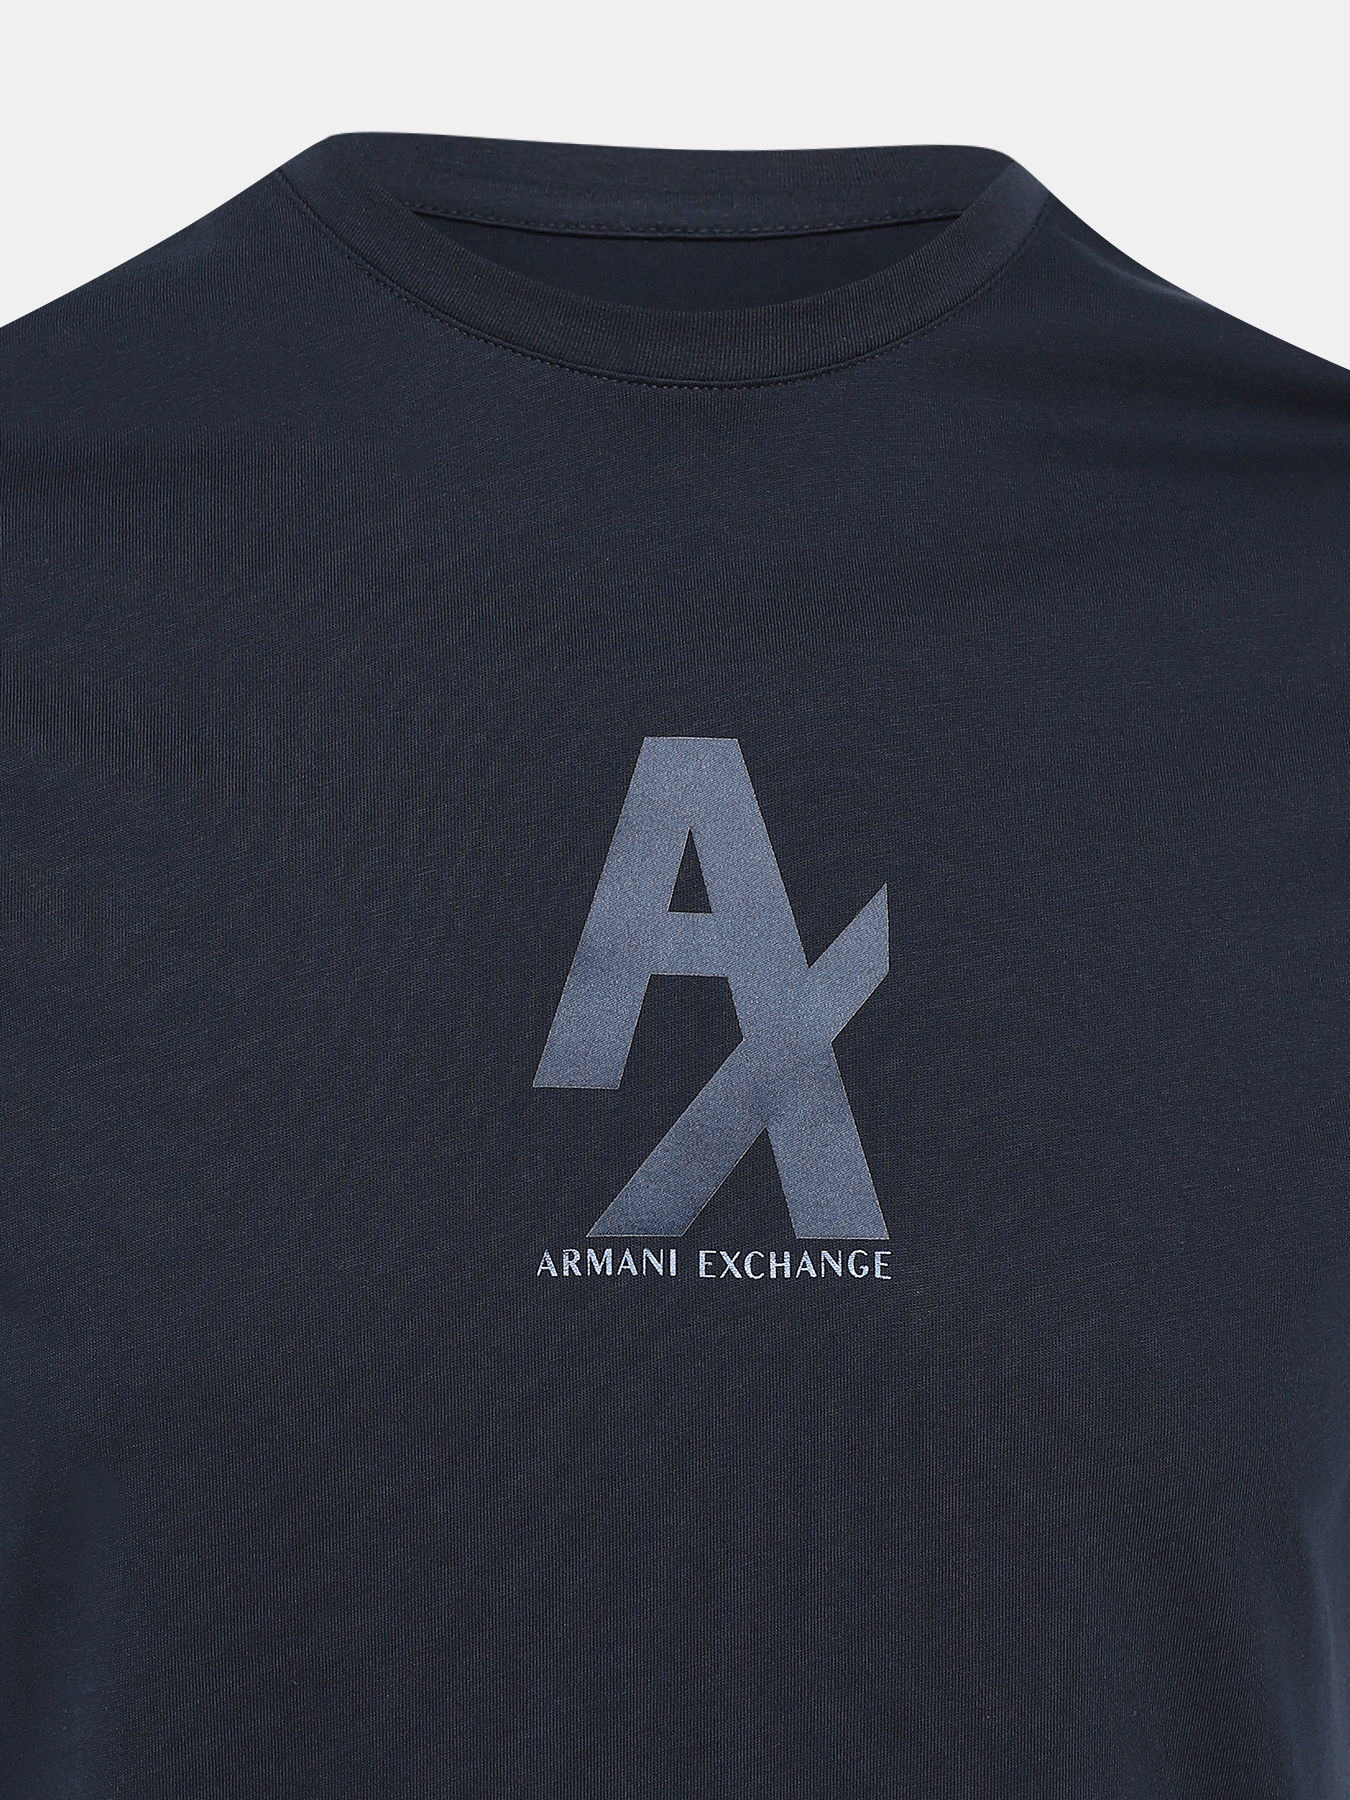 Футболка Armani Exchange 422403-043, цвет темно-синий, размер 48-50 - фото 2